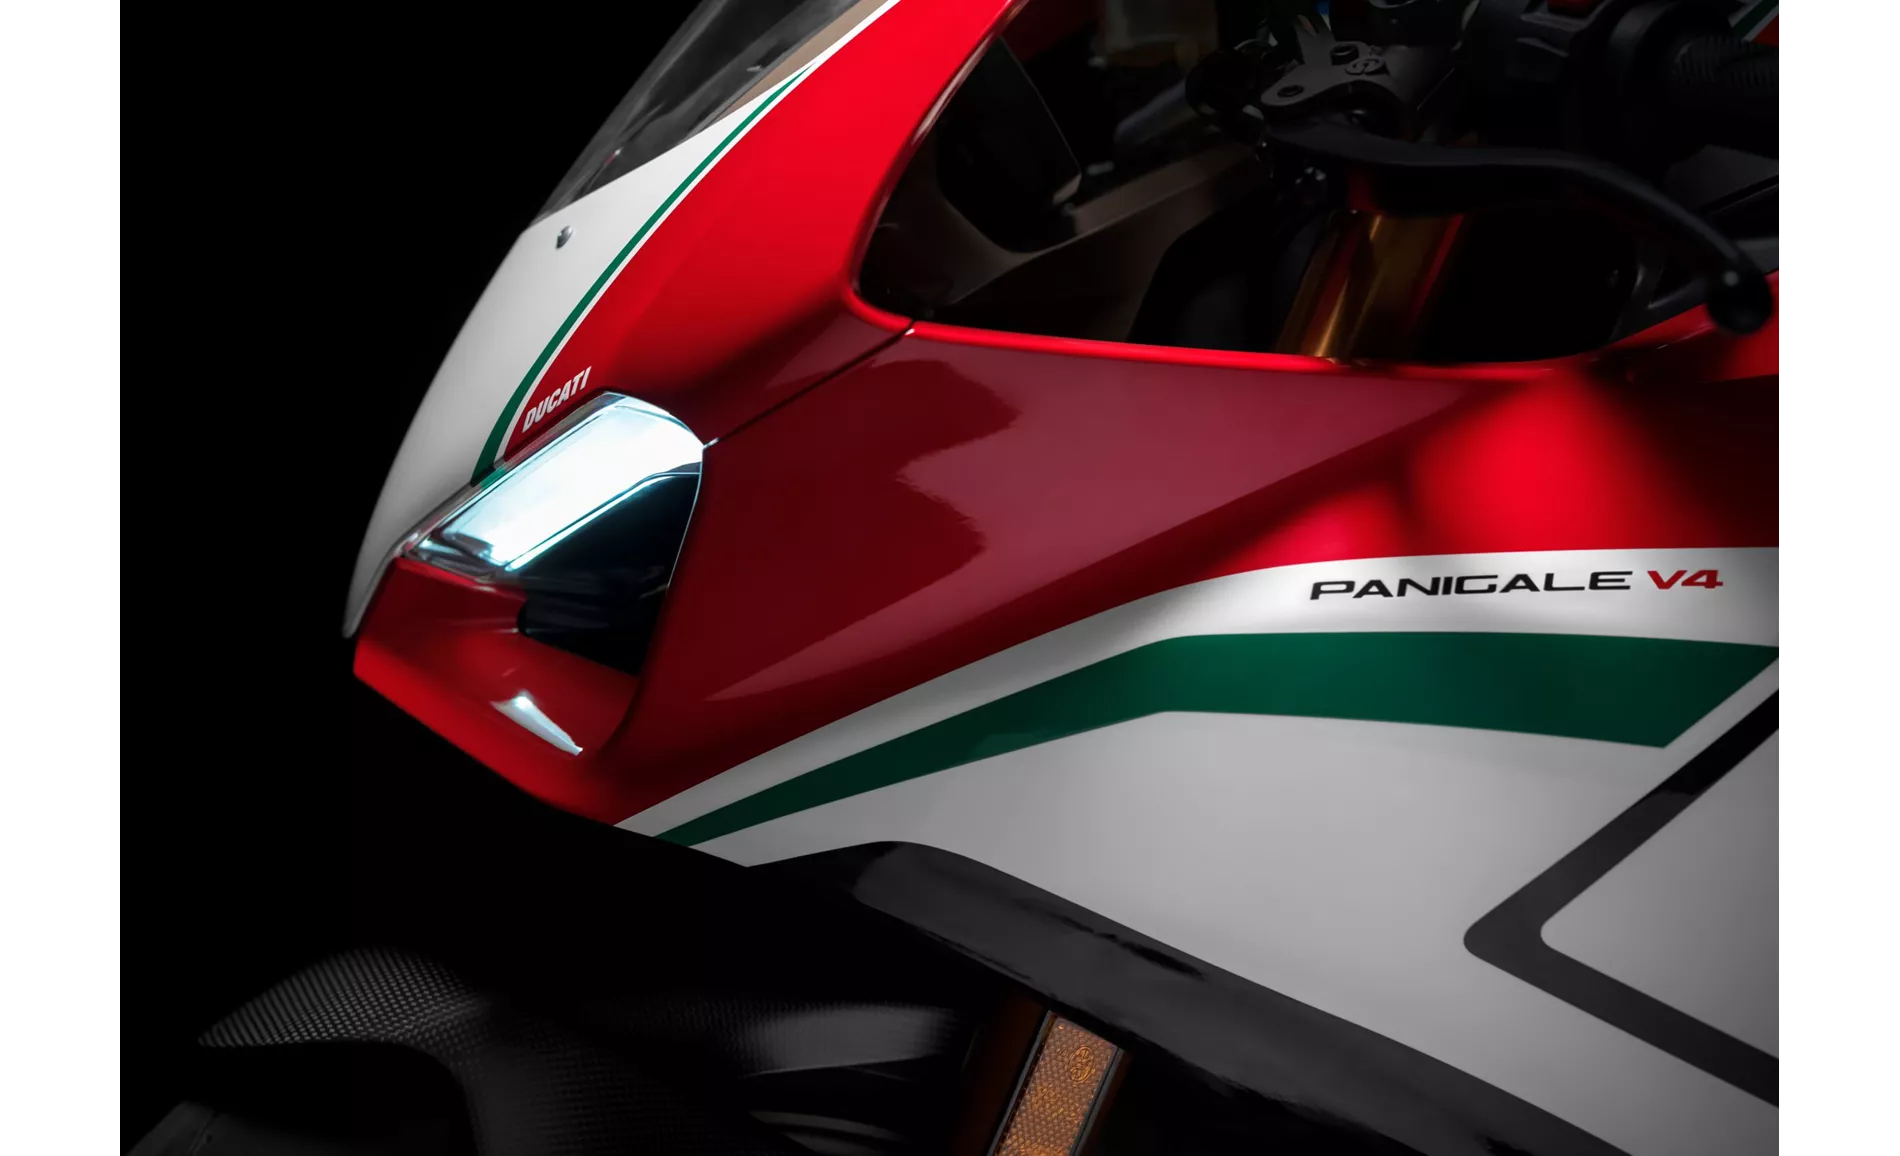 Ducati Panigale V4 Speciale 2019